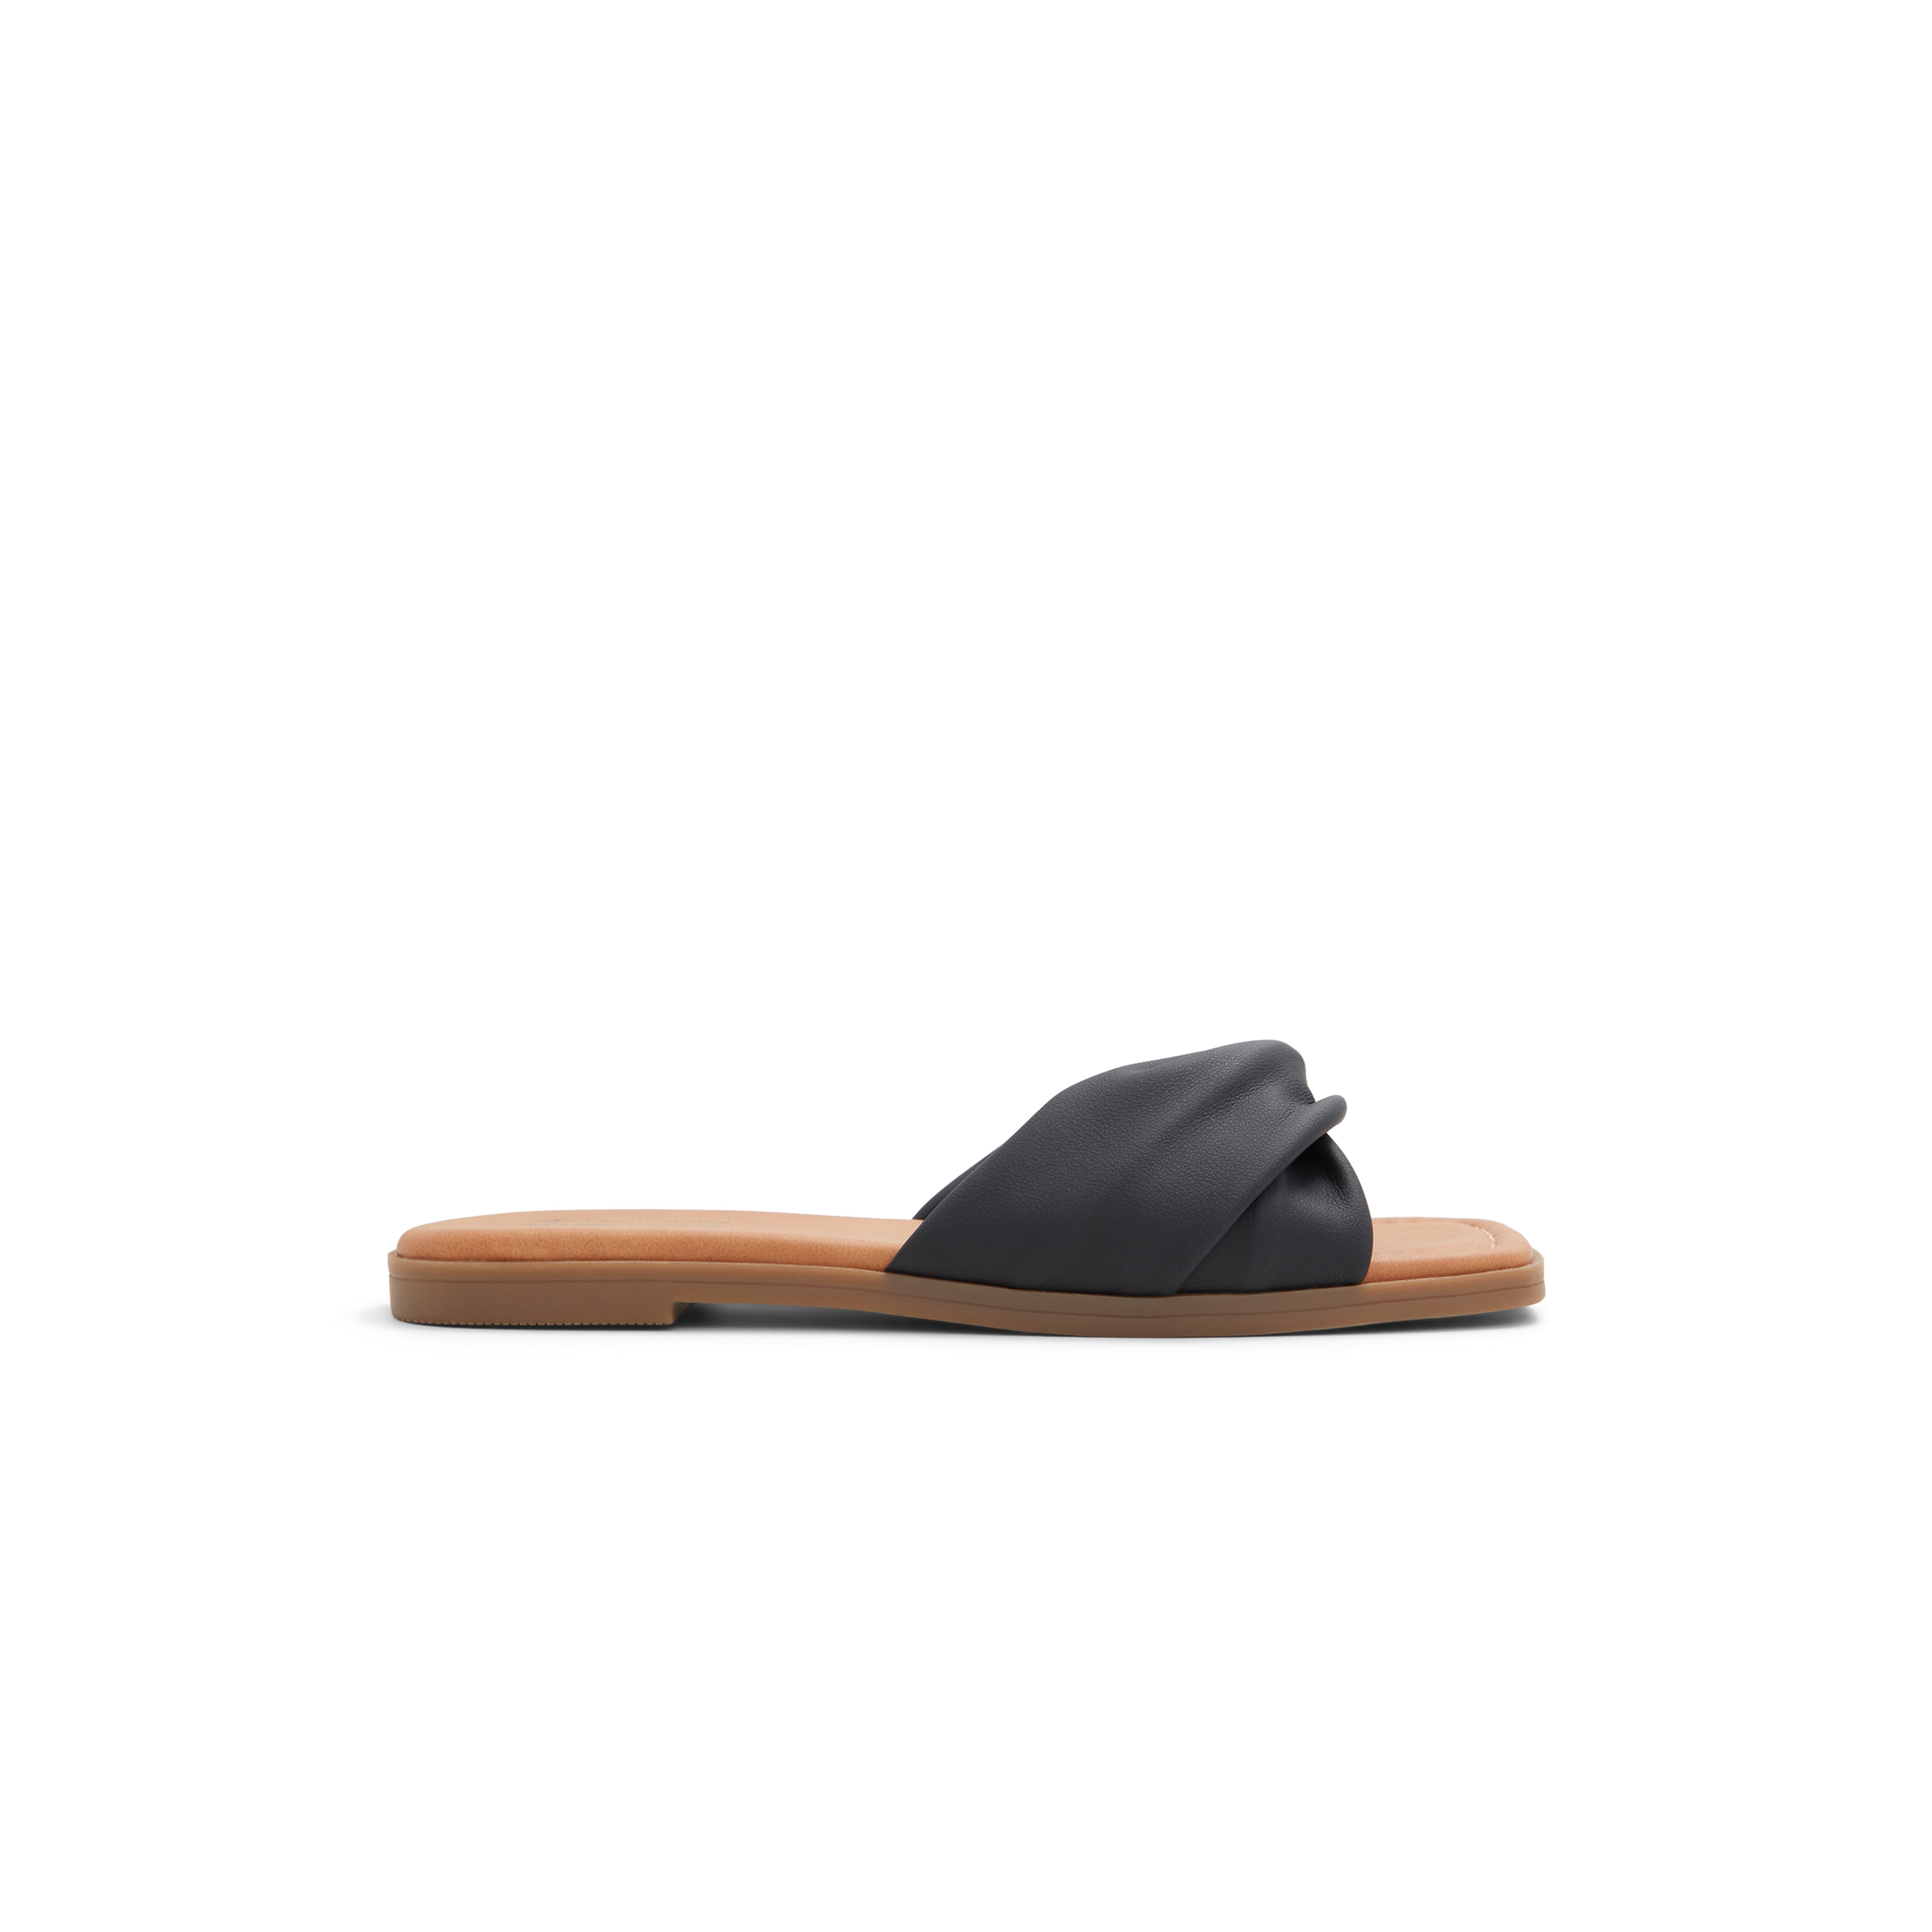 Peaches Women's Black Flat Sandals image number 0